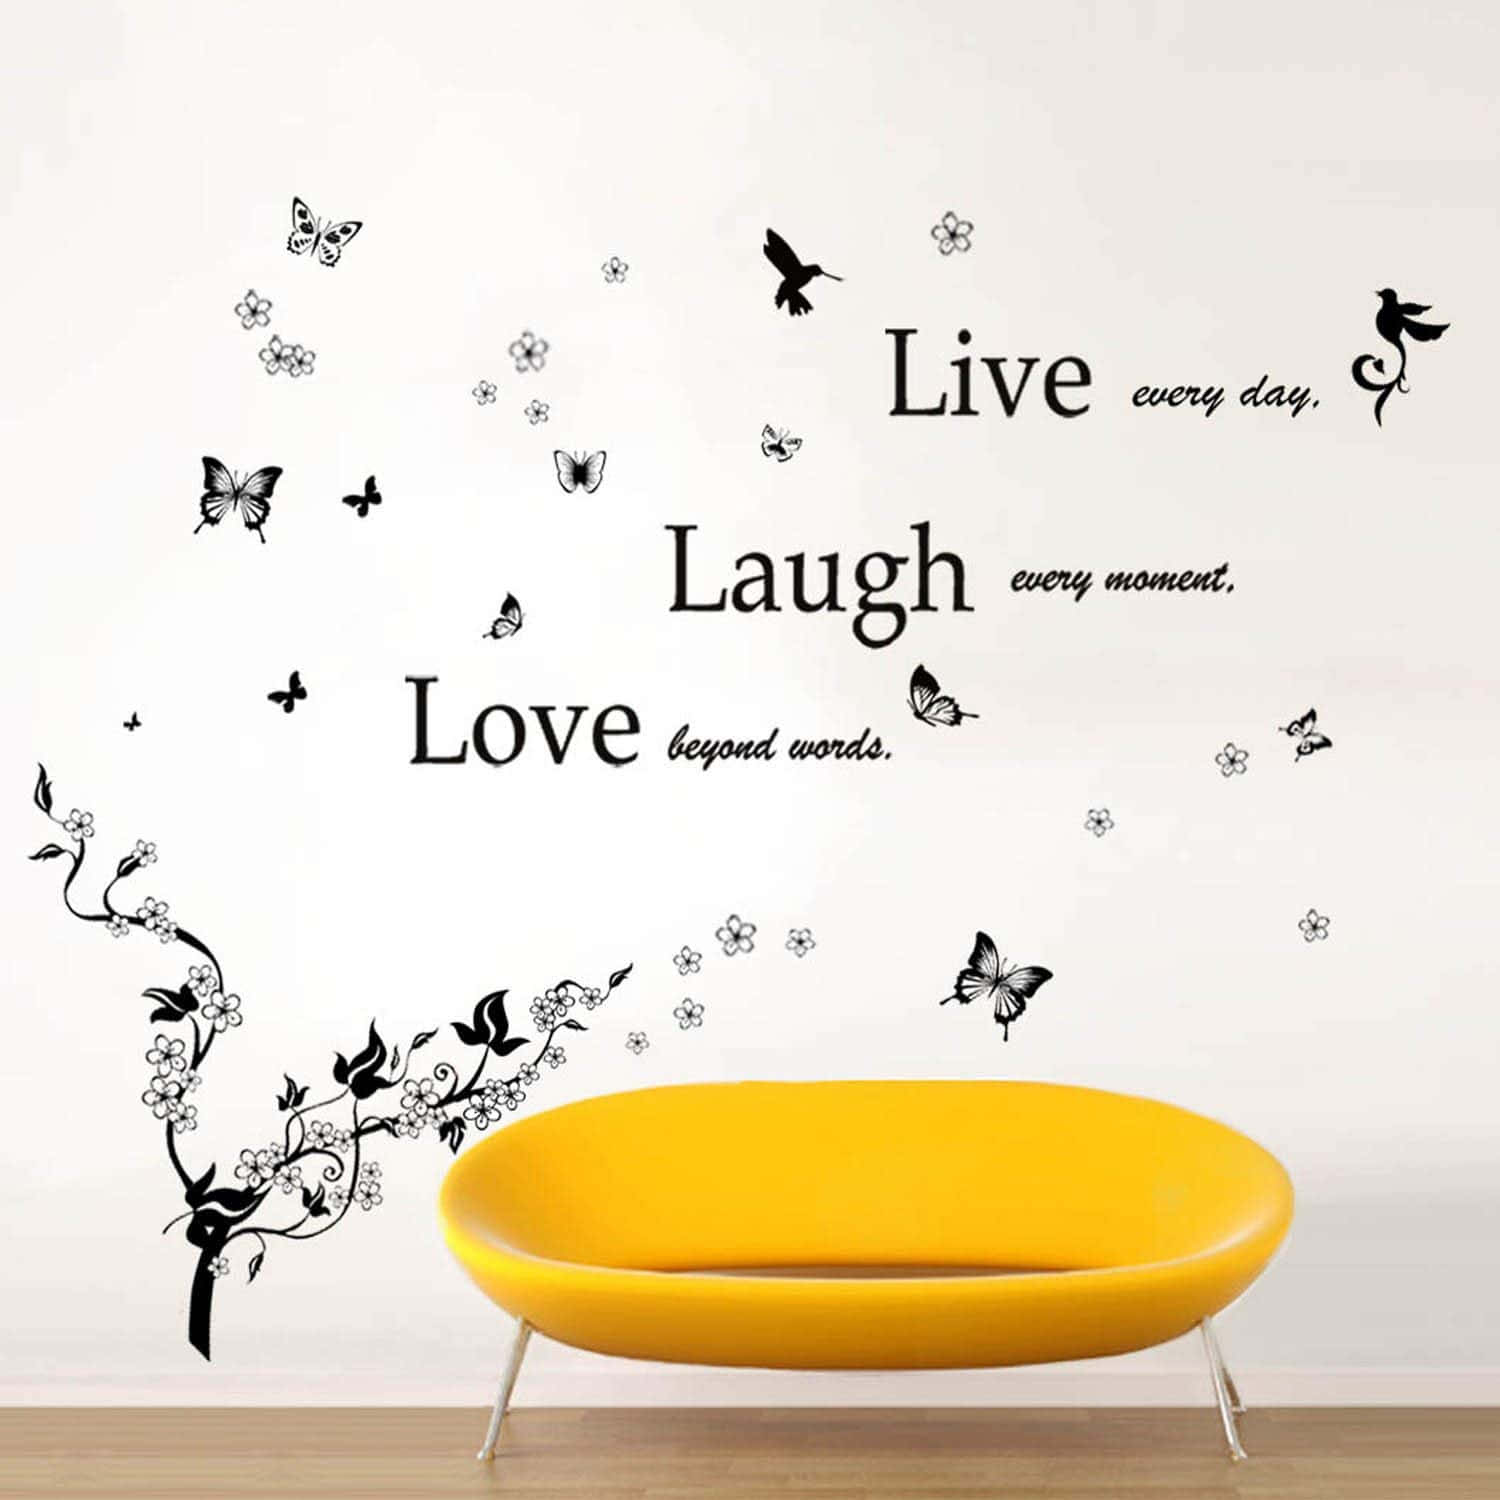 Enjoy life with full bliss Wallpaper